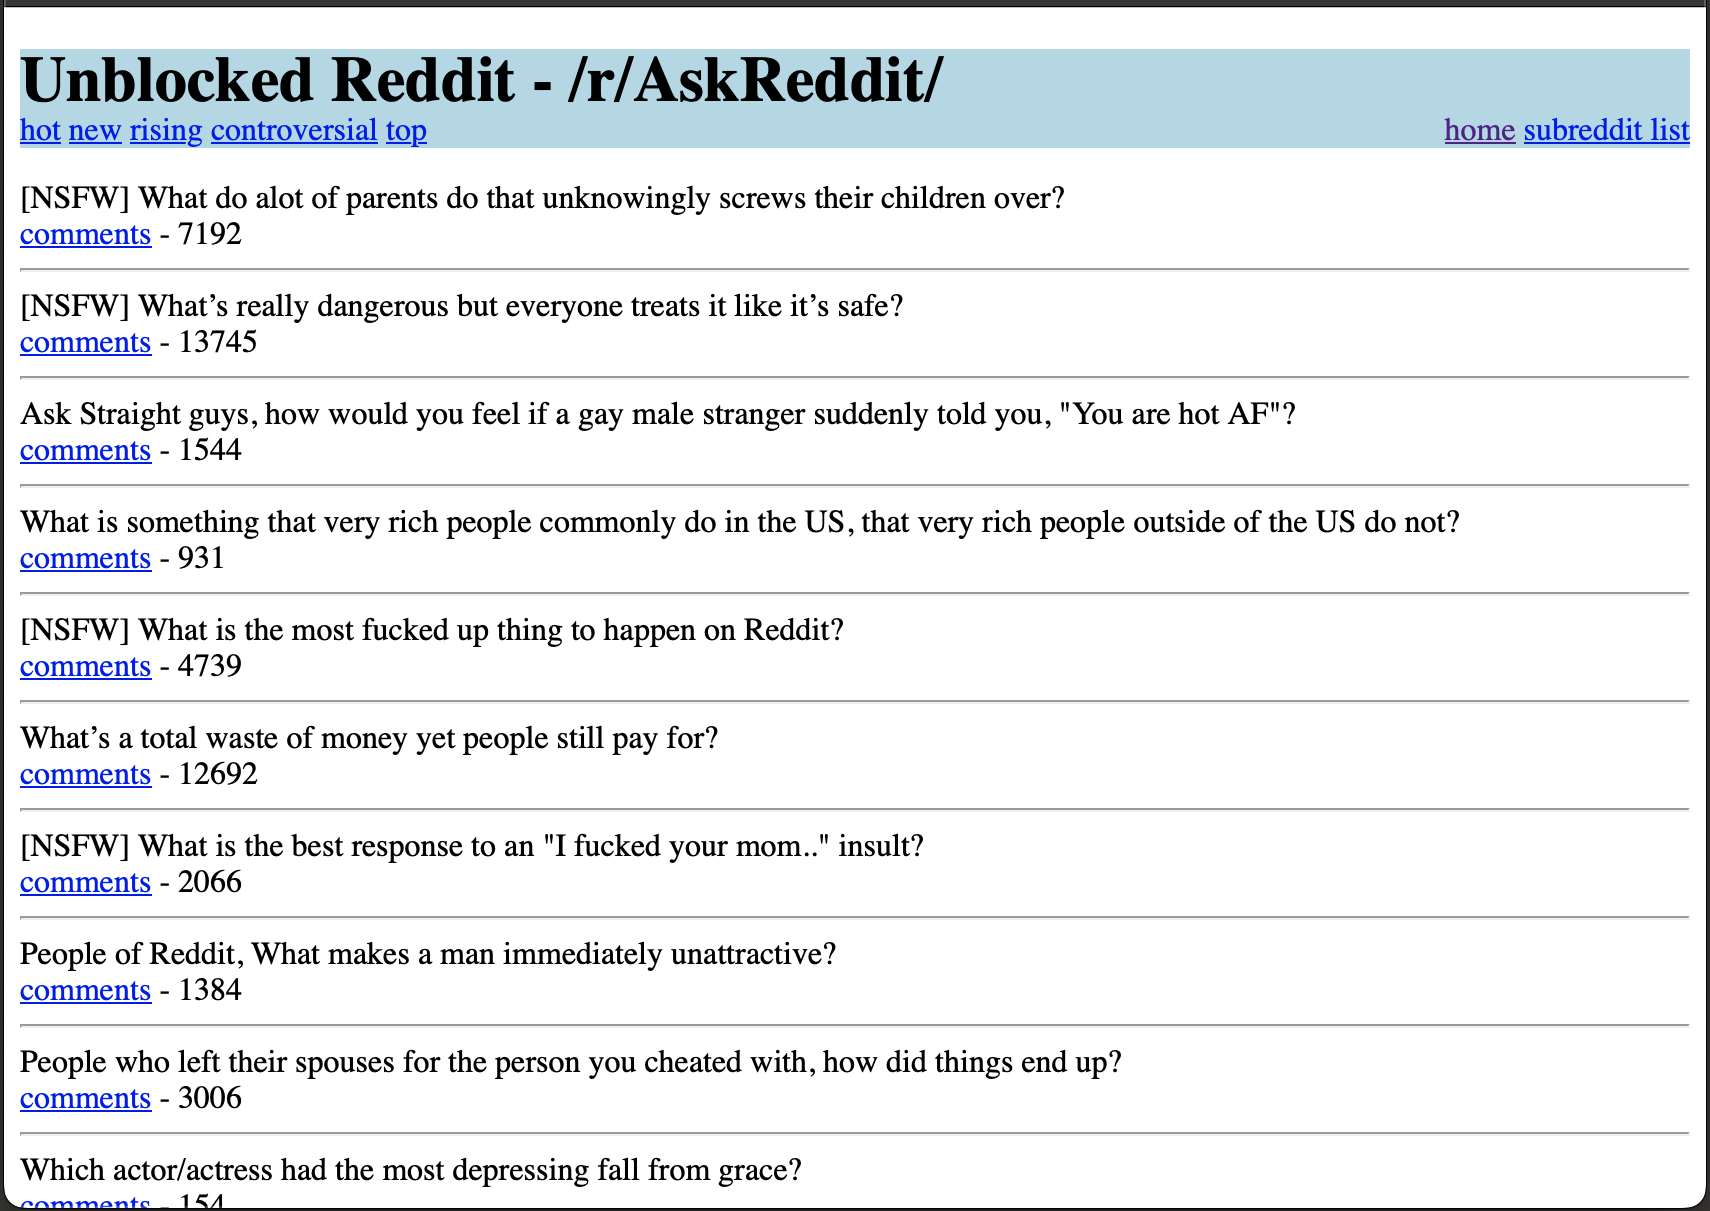 the contents of /r/askreddit in a plain format